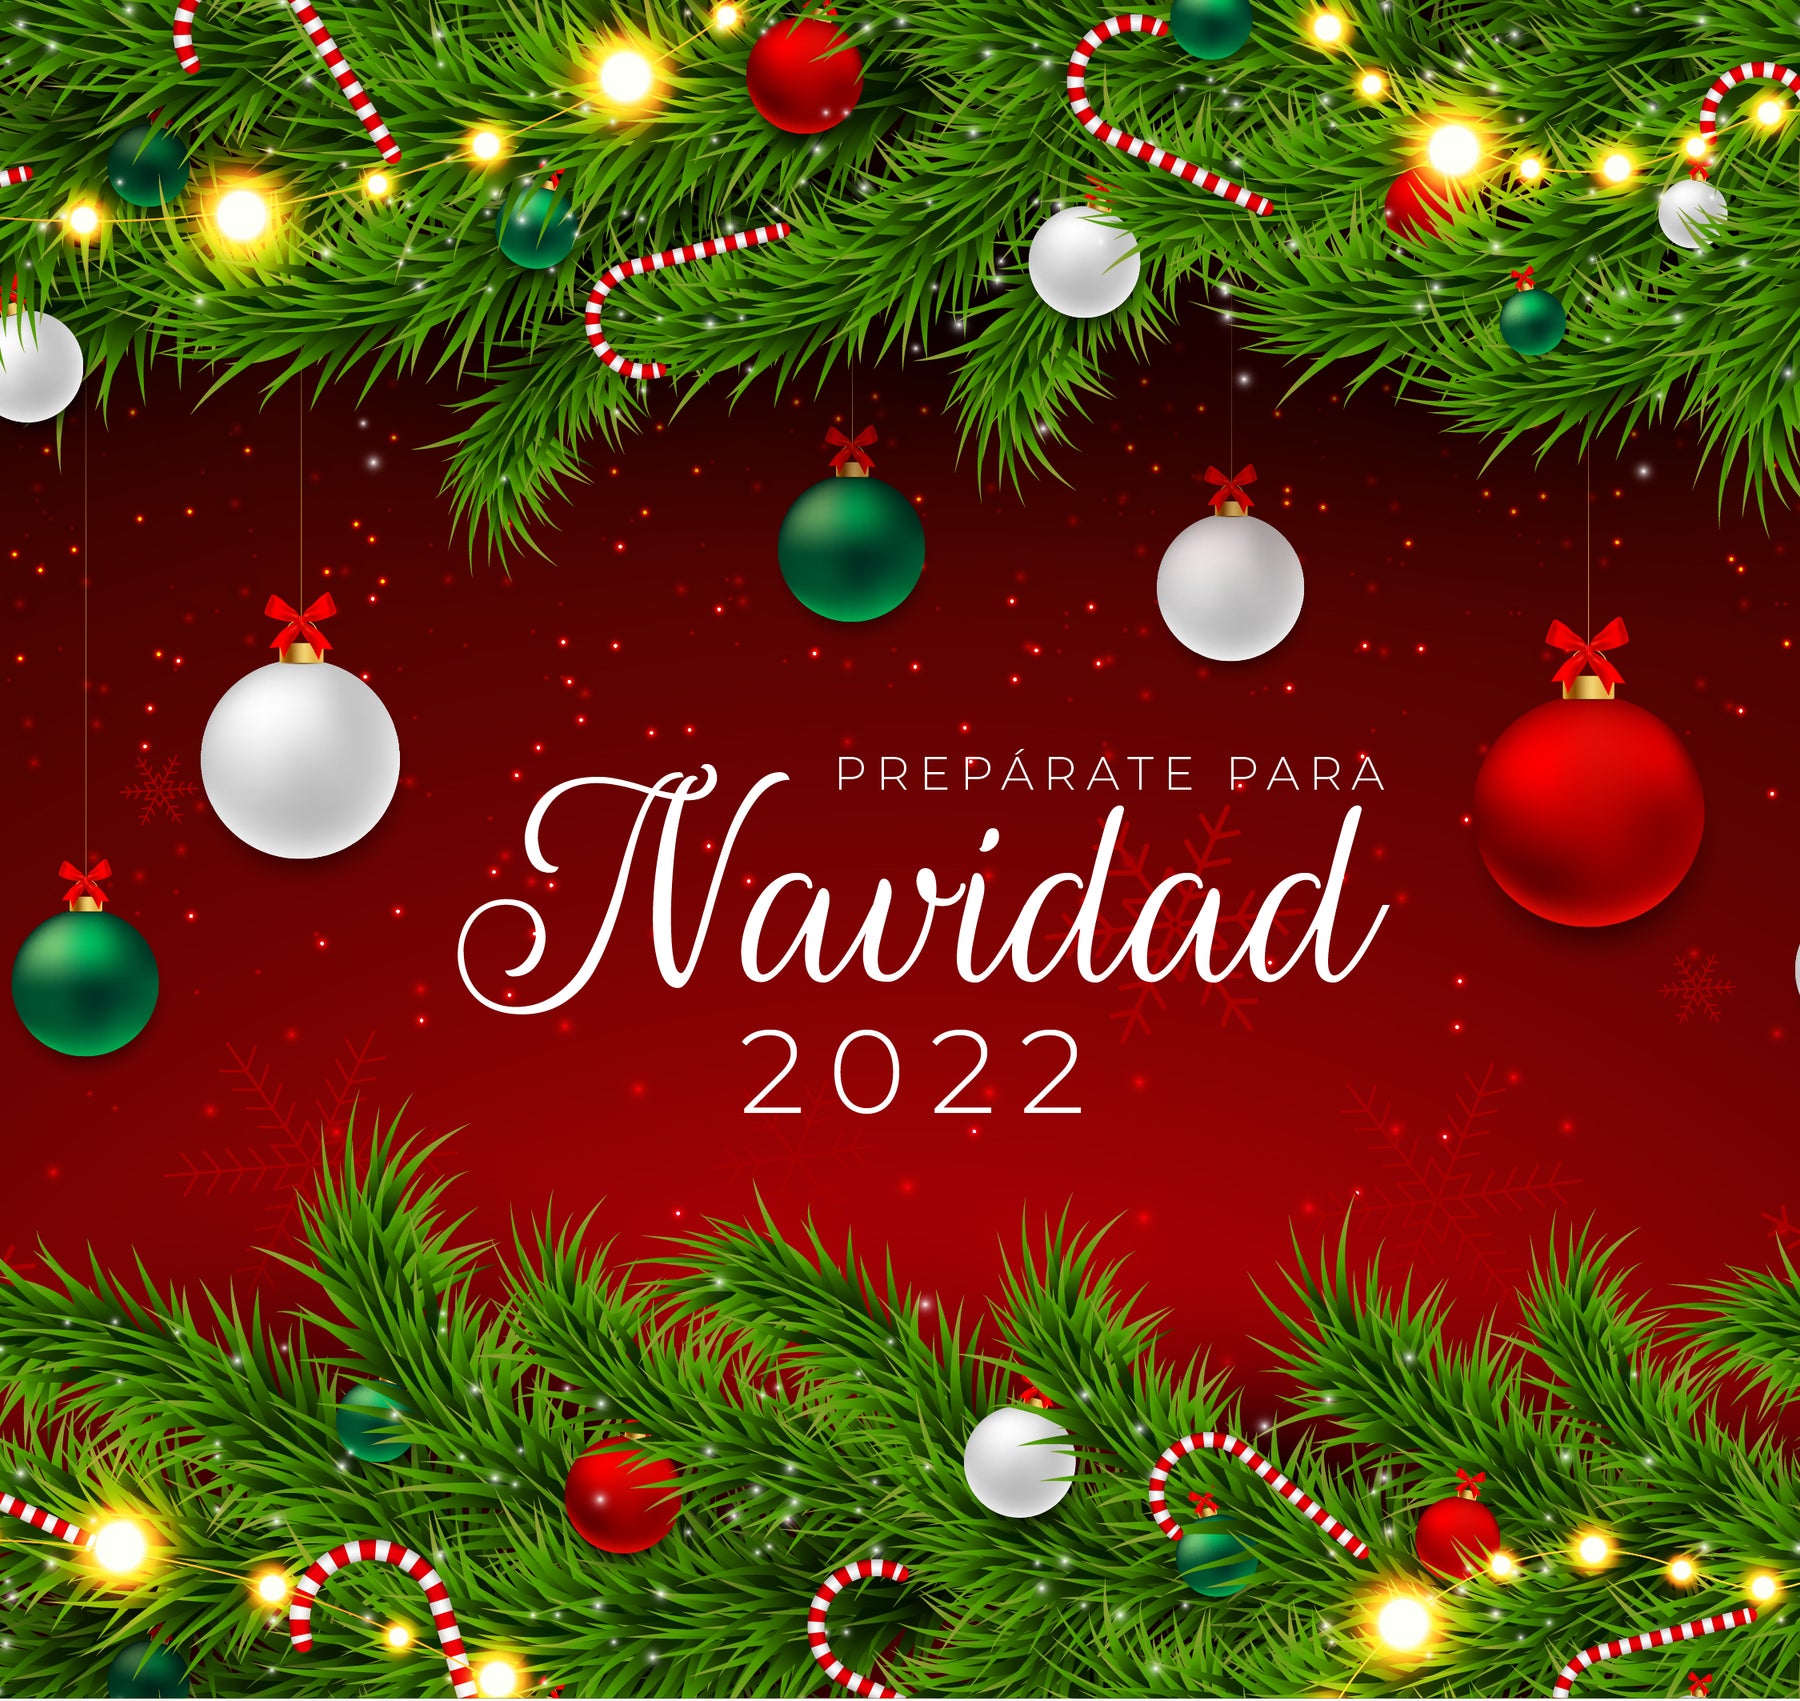 Prepárate para Navidad 2022